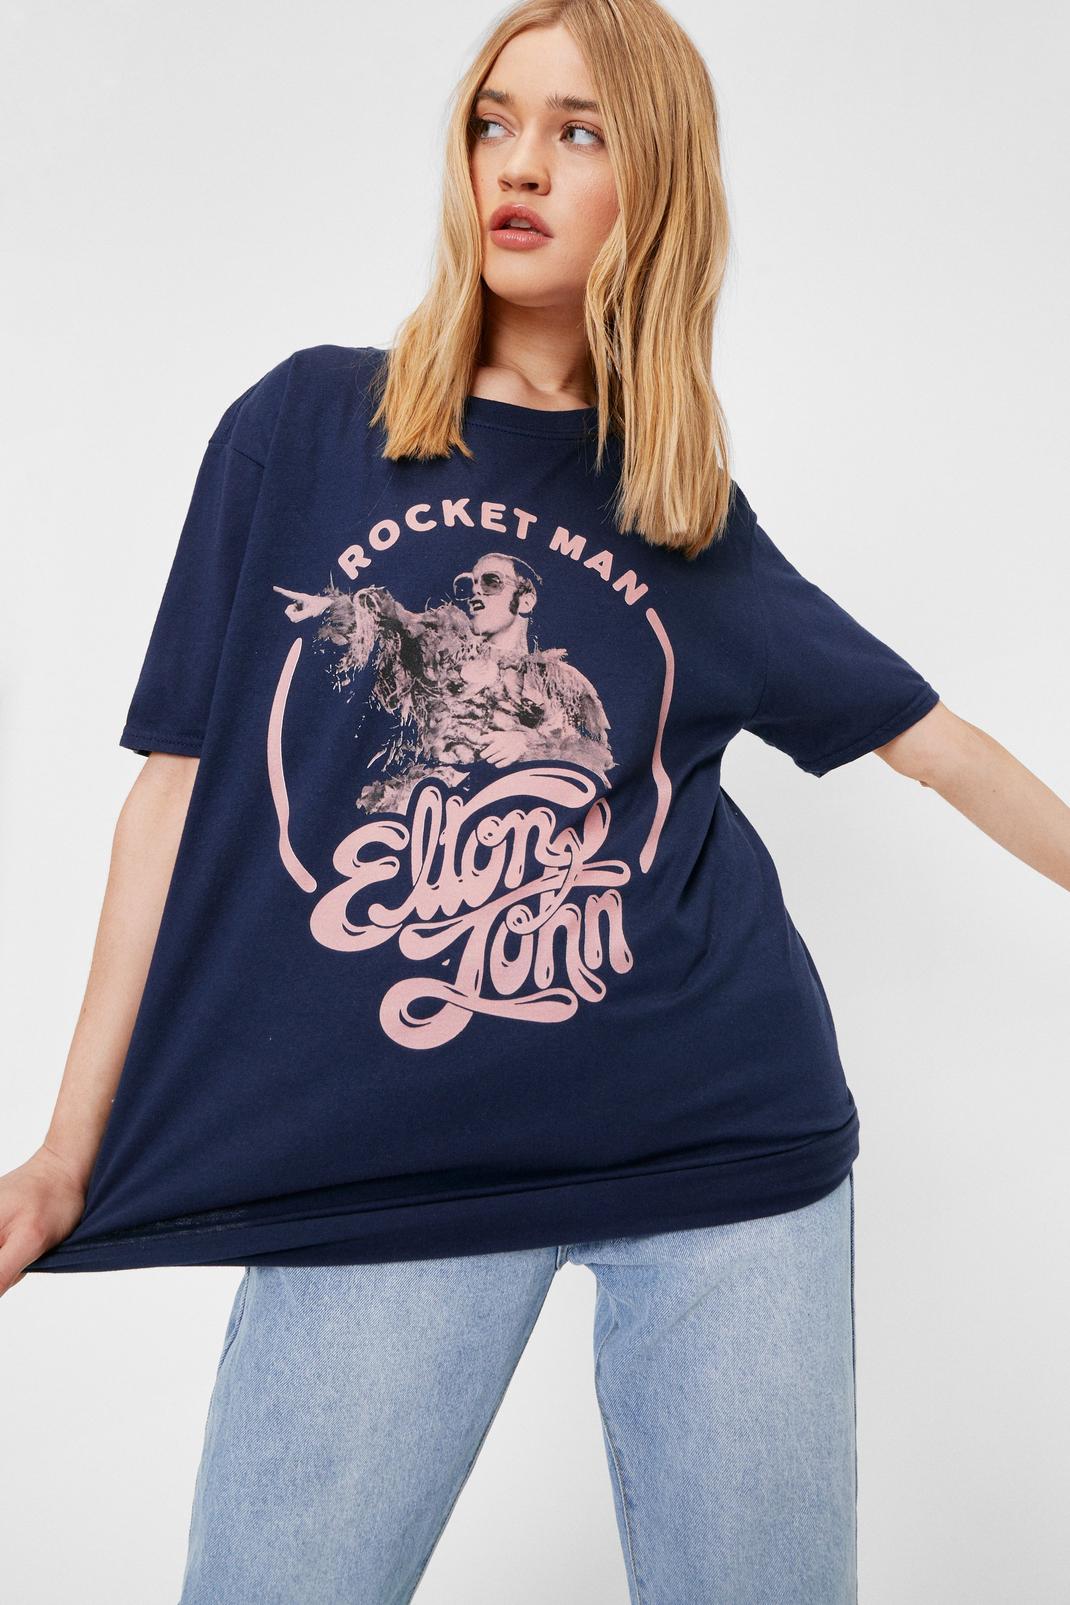 Navy Rocket Man Oversized Graphic Band T-Shirt image number 1